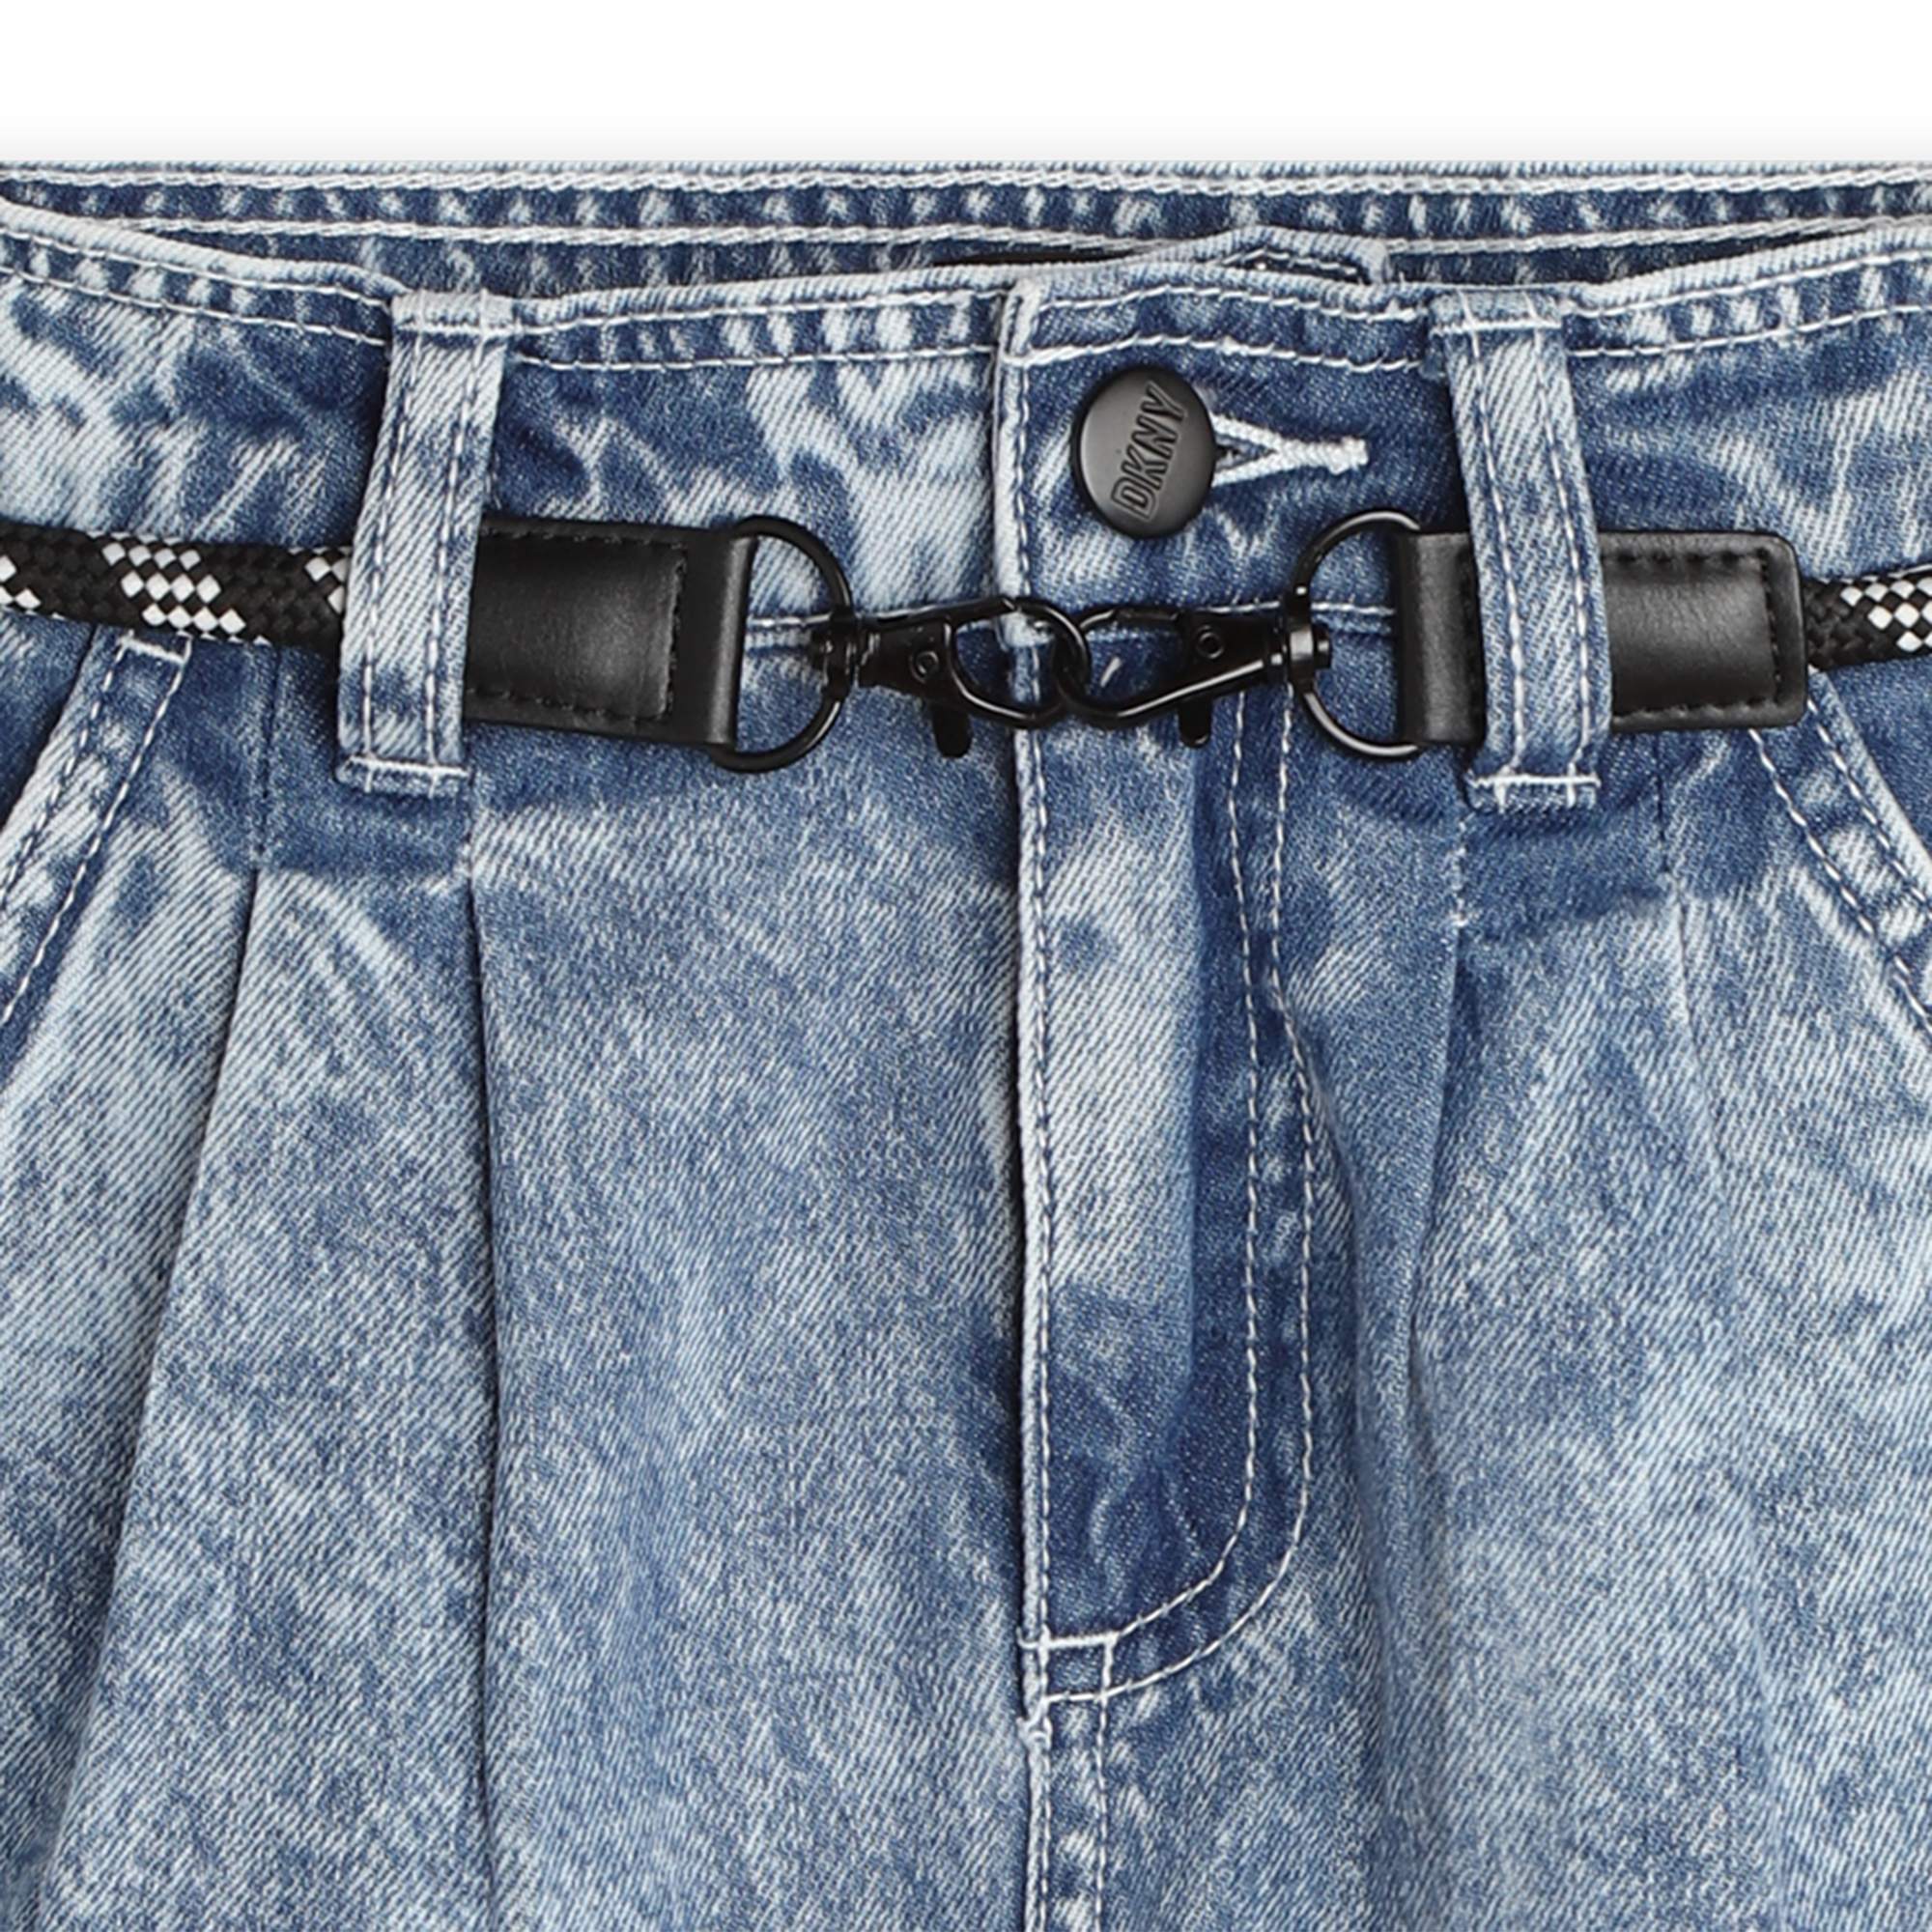 Jeans-Shorts DKNY Für MÄDCHEN